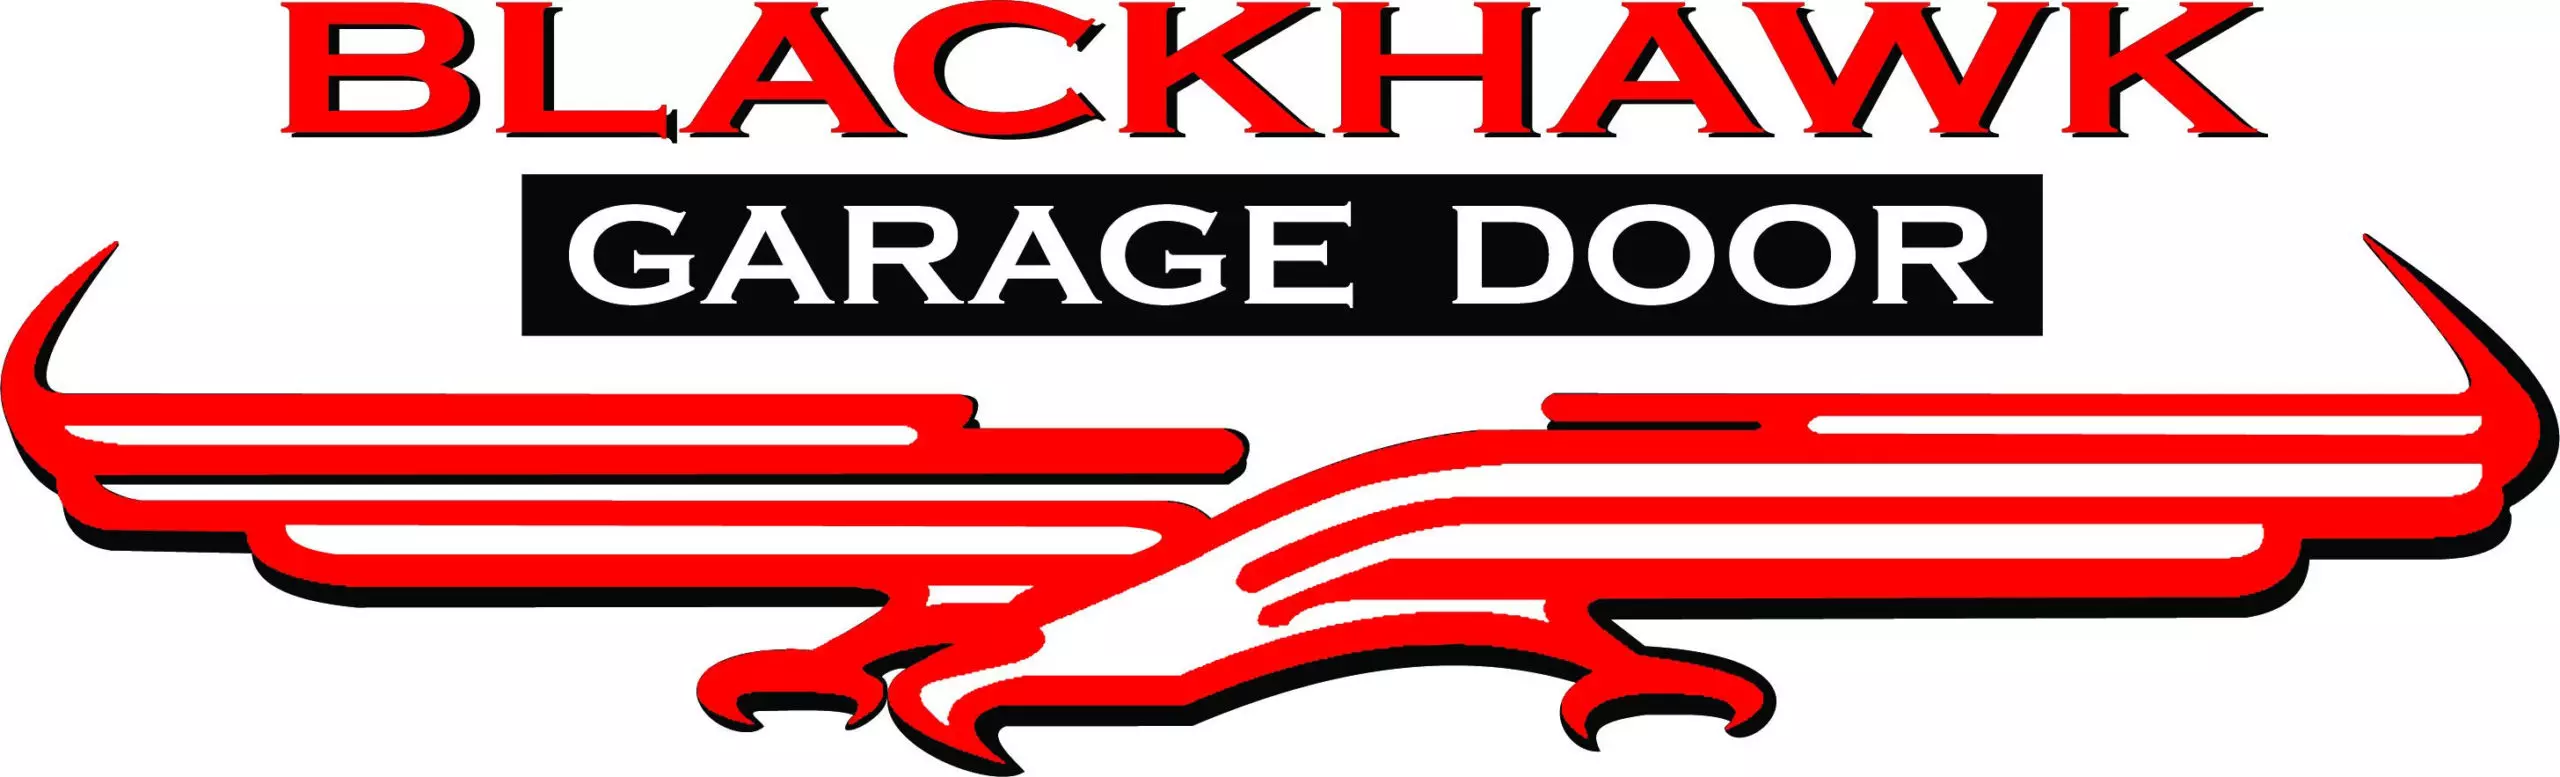 blackhawk logo 